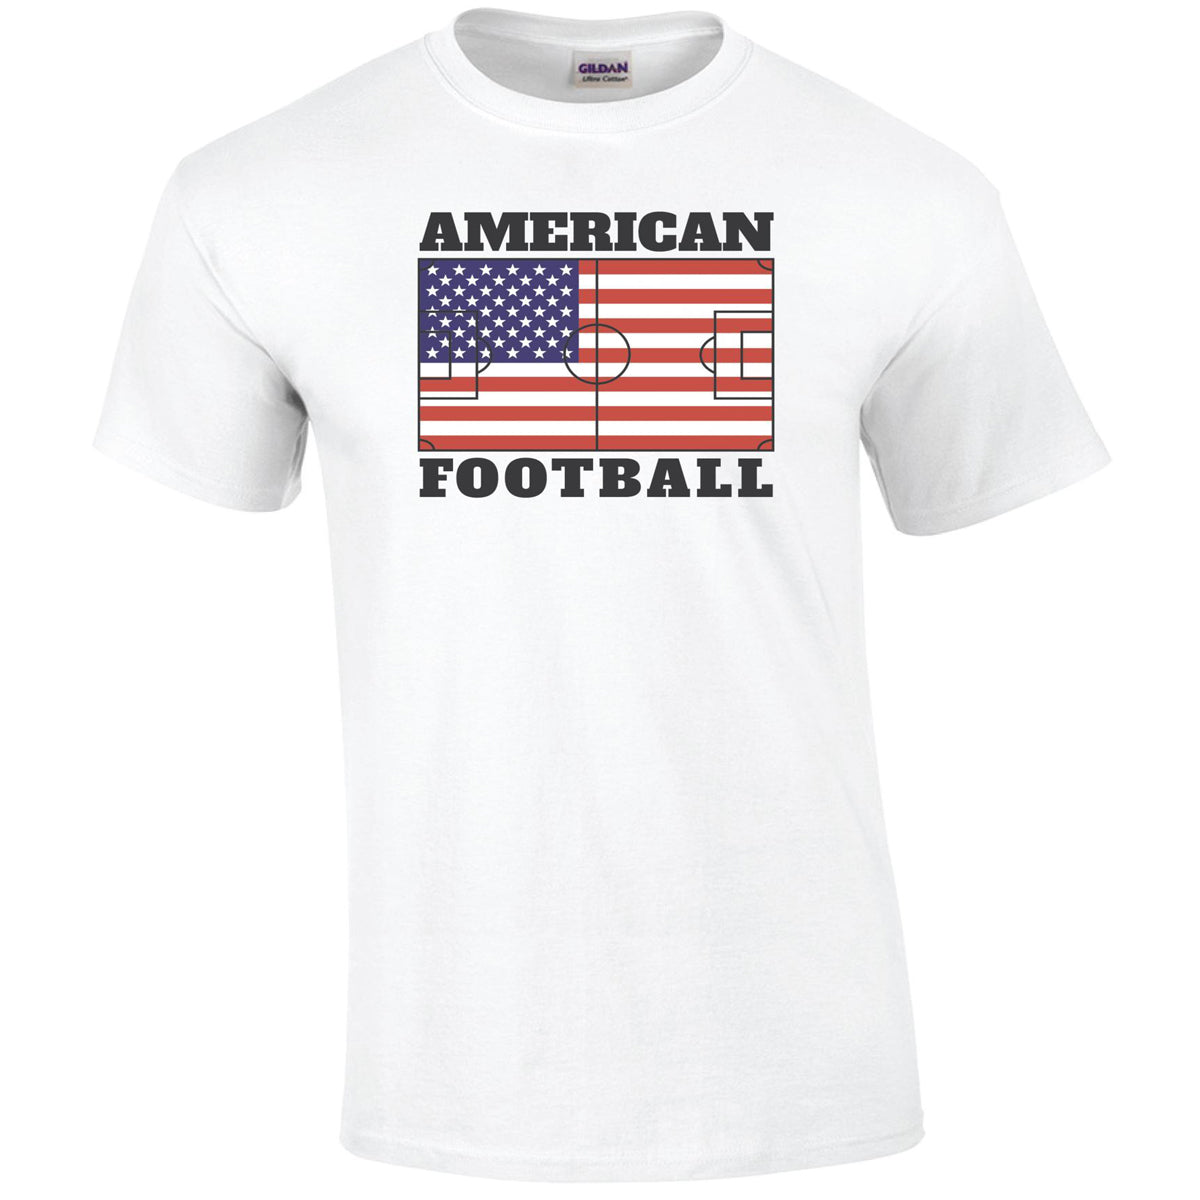 USA Soccer T-Shirt - American Football T-shirts 411 Youth Medium White 